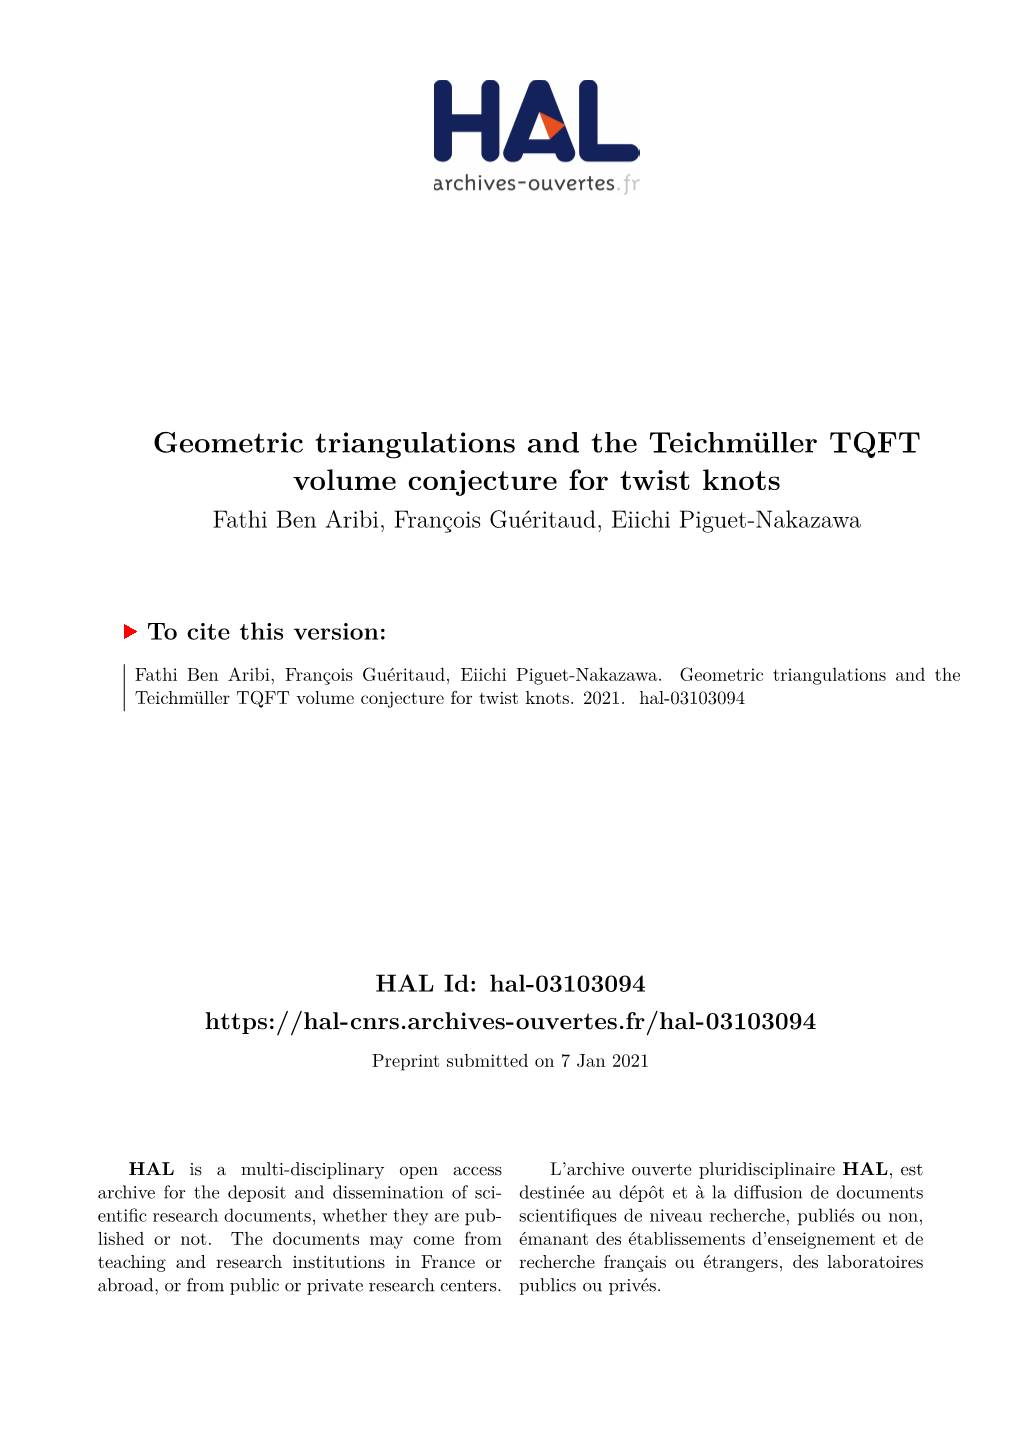 Geometric Triangulations and the Teichmüller TQFT Volume Conjecture for Twist Knots Fathi Ben Aribi, François Guéritaud, Eiichi Piguet-Nakazawa